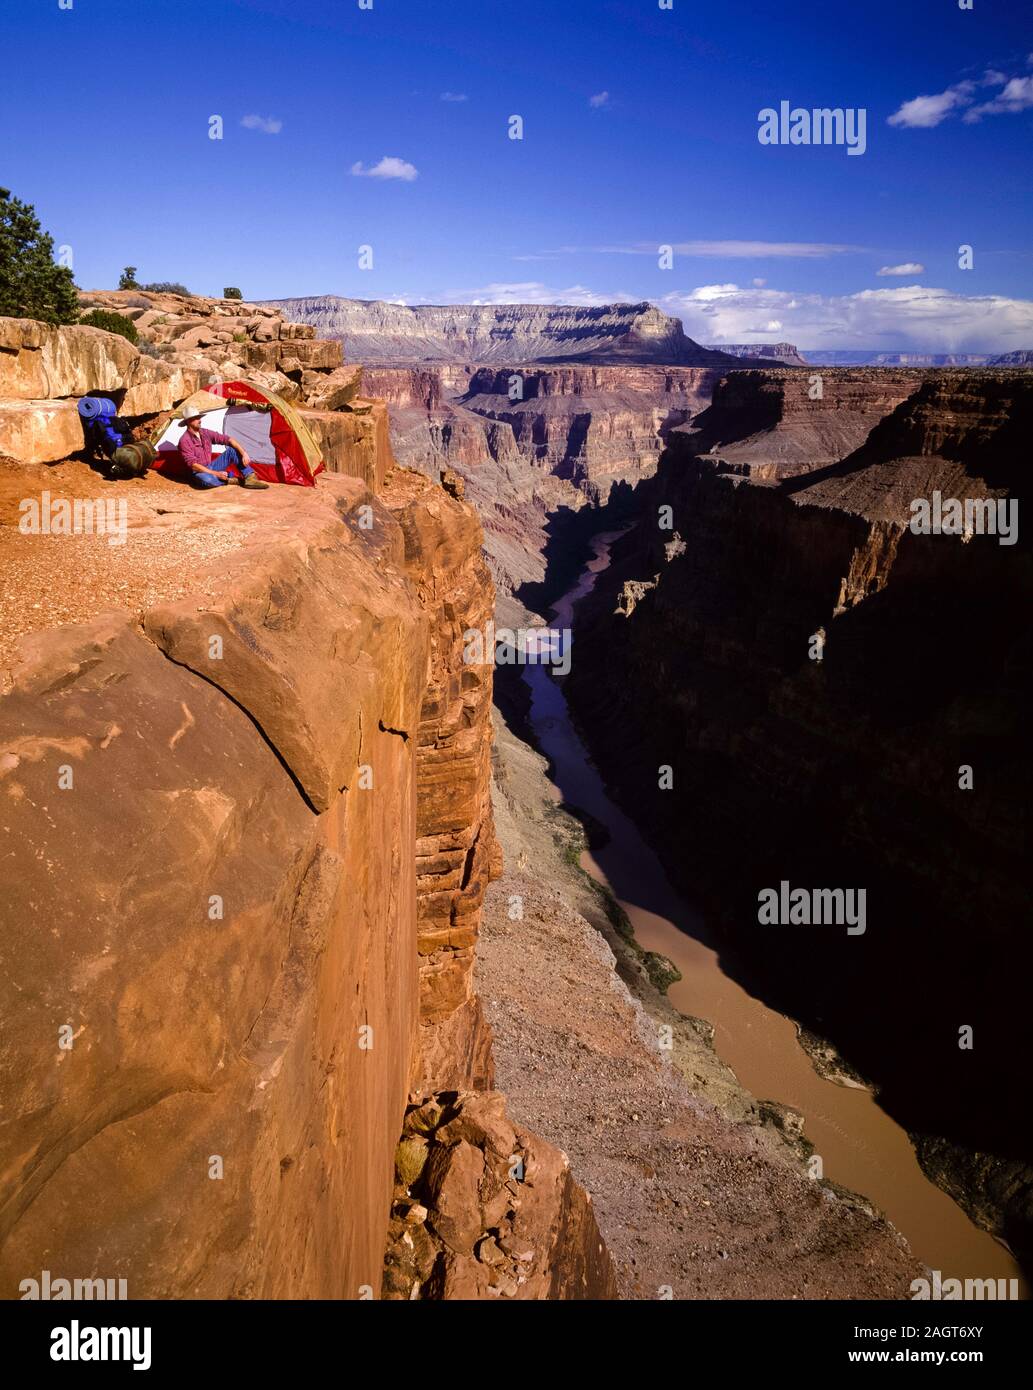 Camping at the edge above the Colorado River at Toroweap, Grand Canyon National Park, Arizona Stock Photo